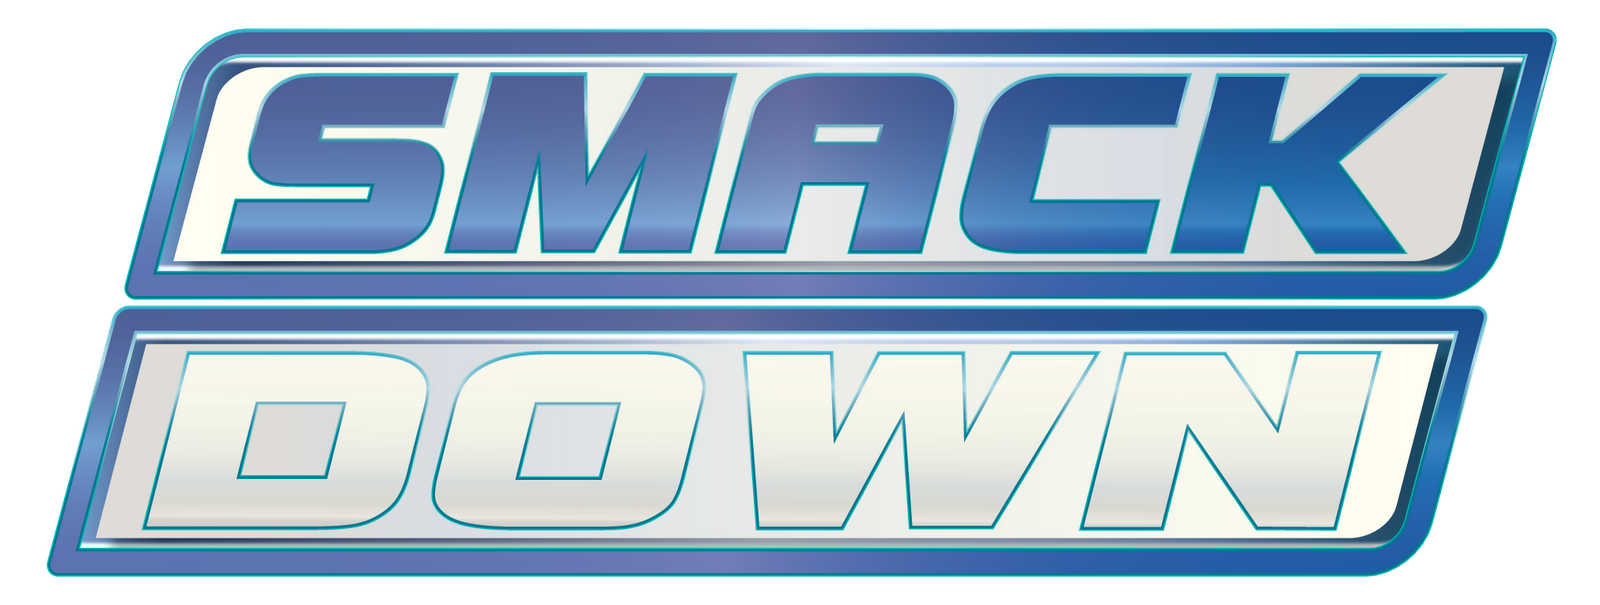 WWE SMACKDOWN. SMACKDOWN logo. SMACKDOWN Raw logo. SMACKDOWN logo 2012. Smack down